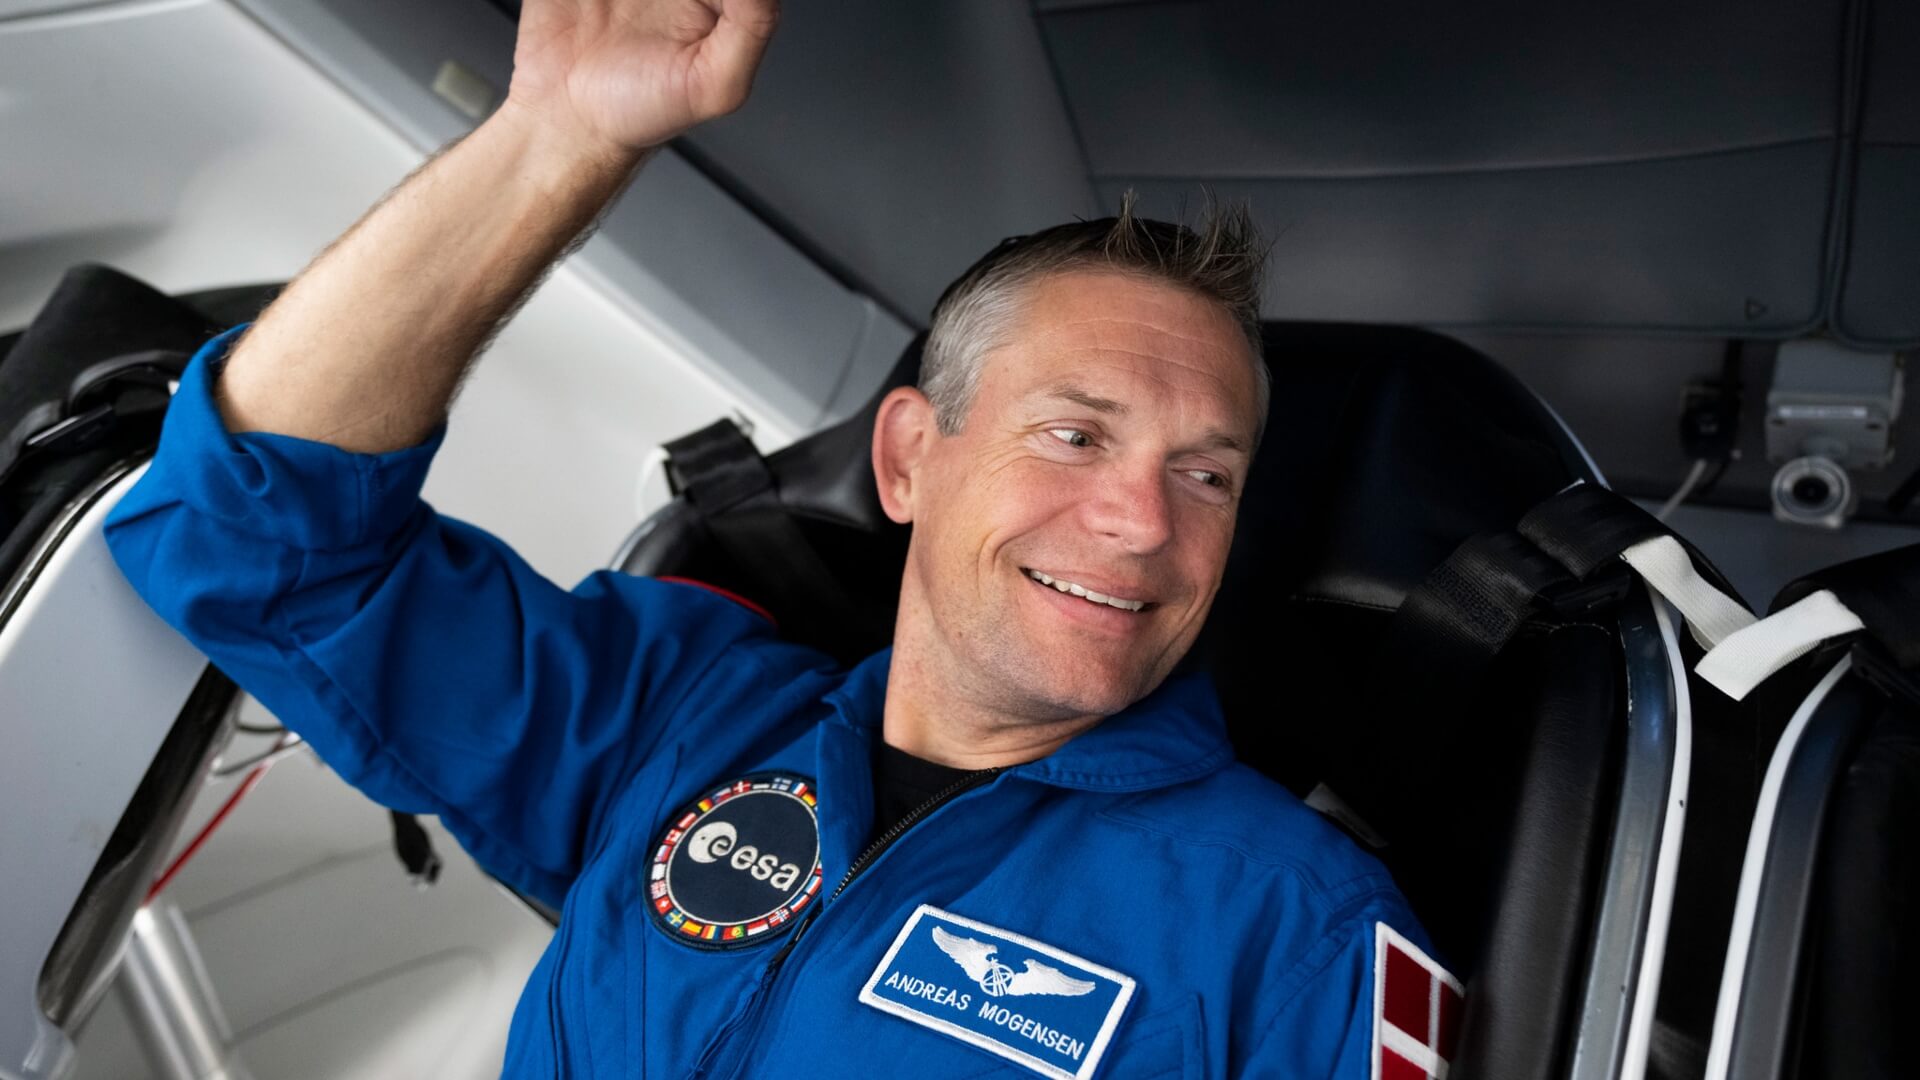 The danish astronaut Andreas Mogensen preparing for the Huginn mission